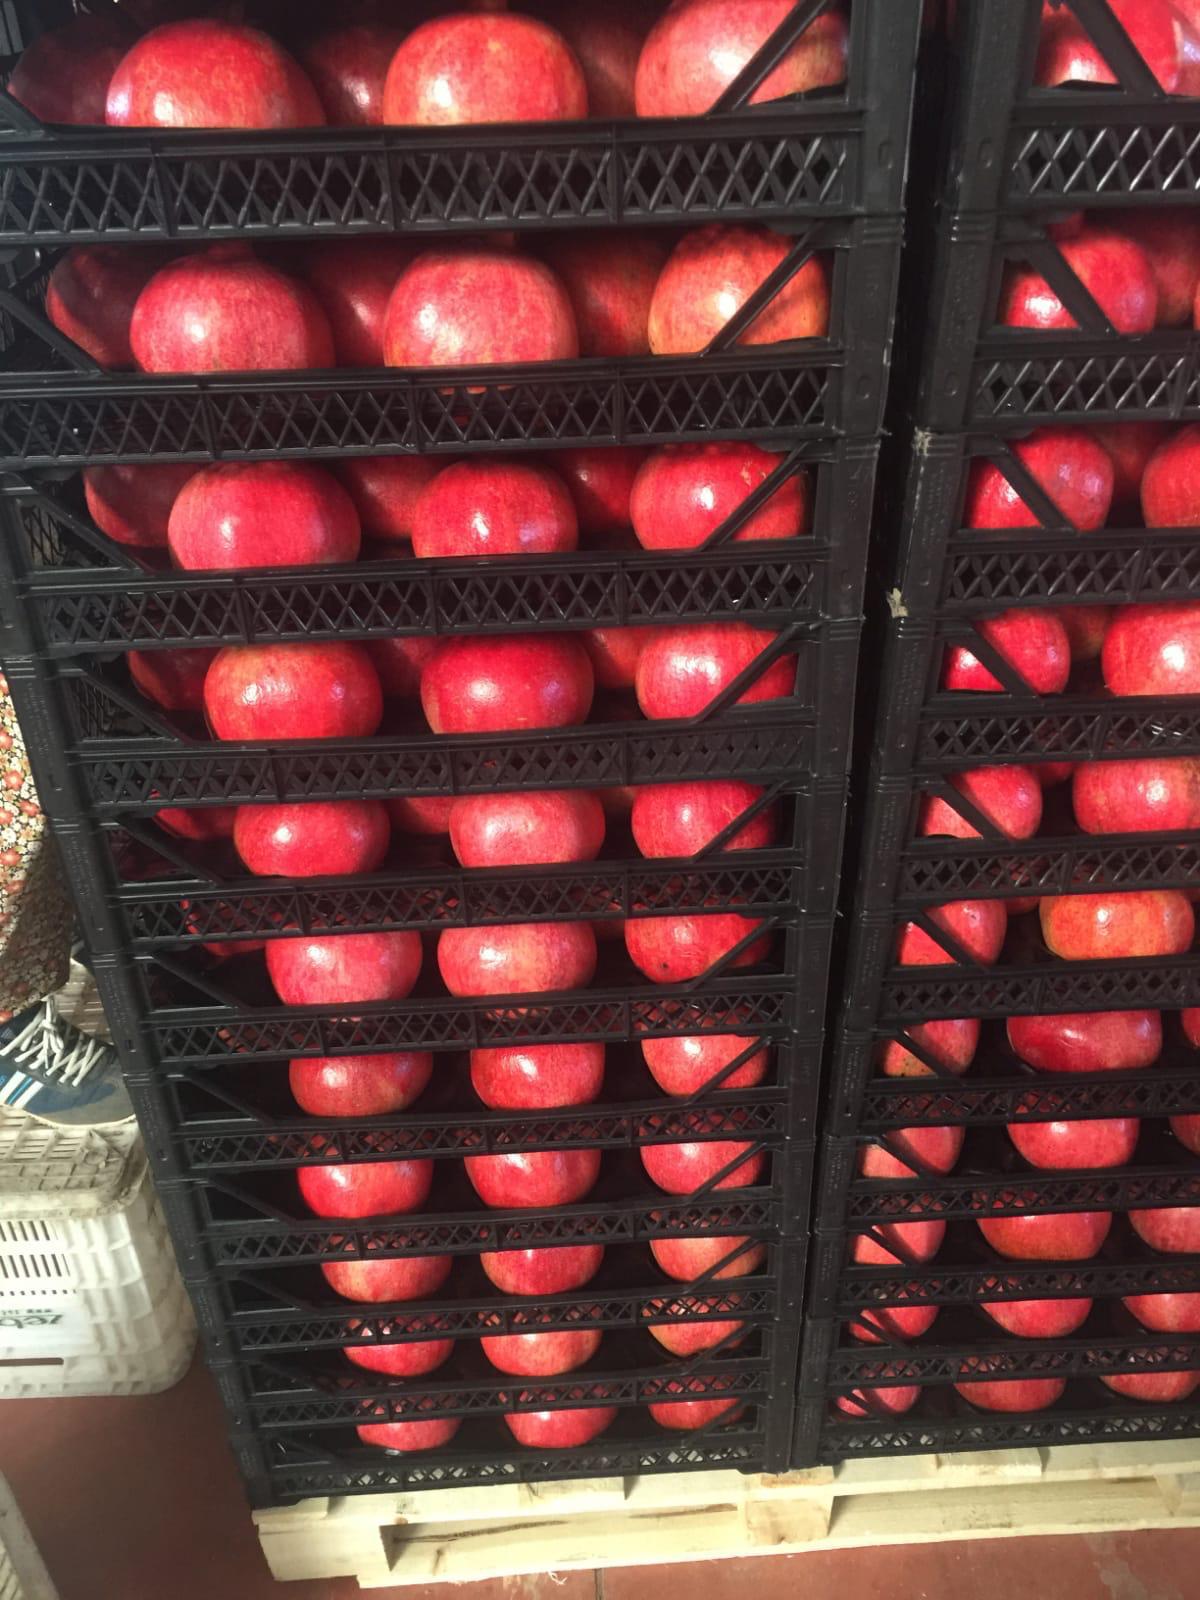 Turkish Pomegranate